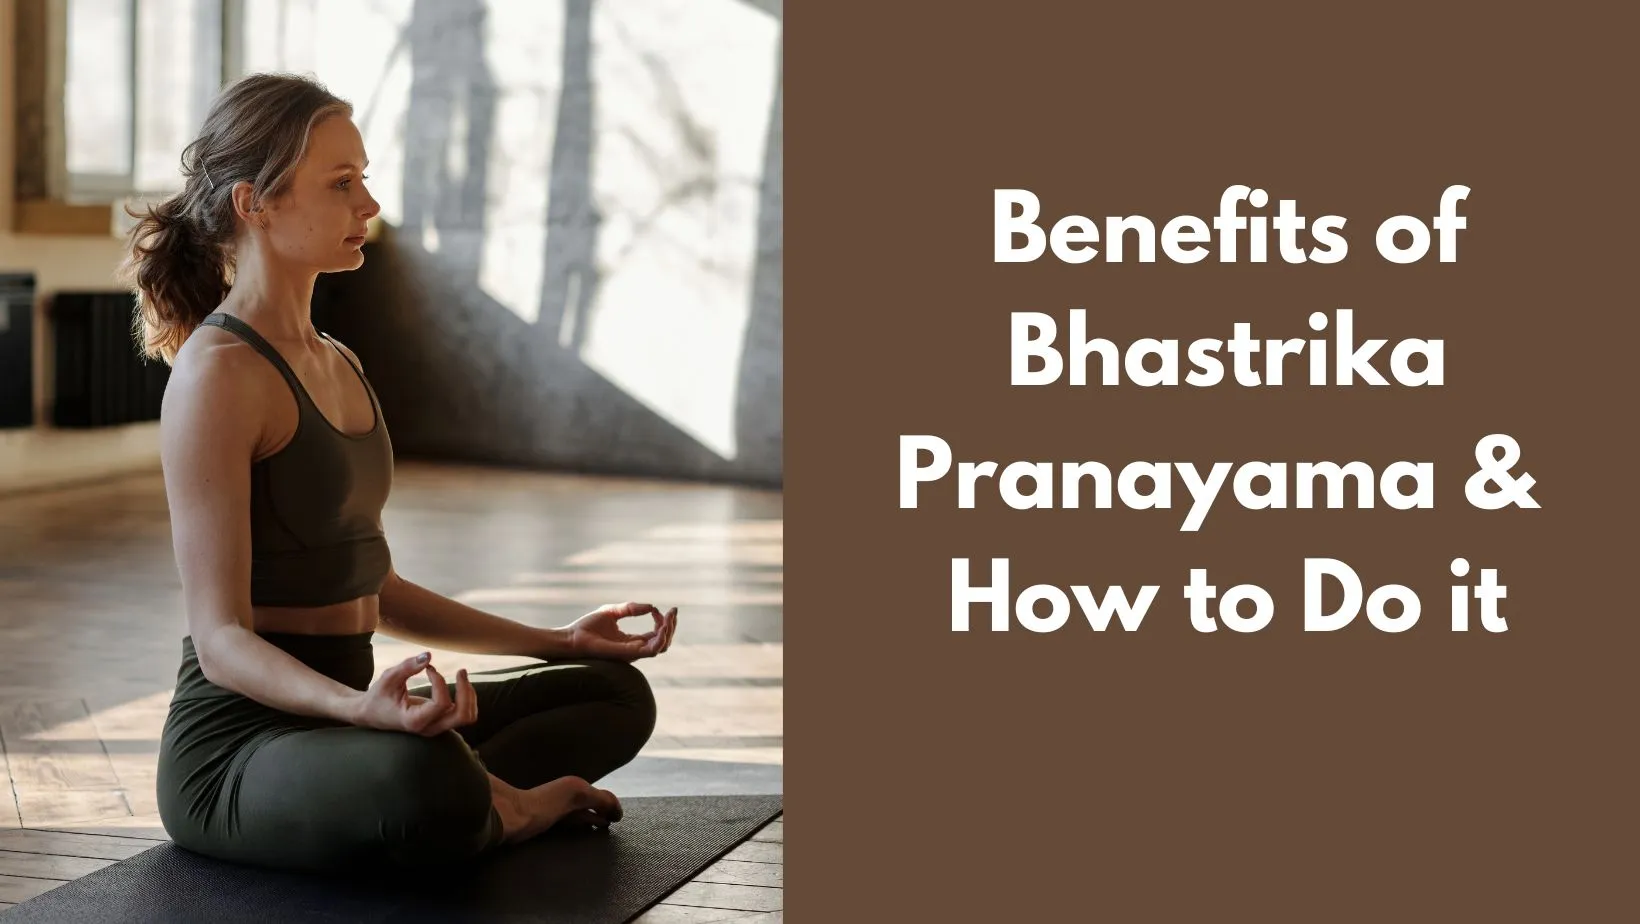 Bhastrika Pranayama: The 7 Benefits & Steps